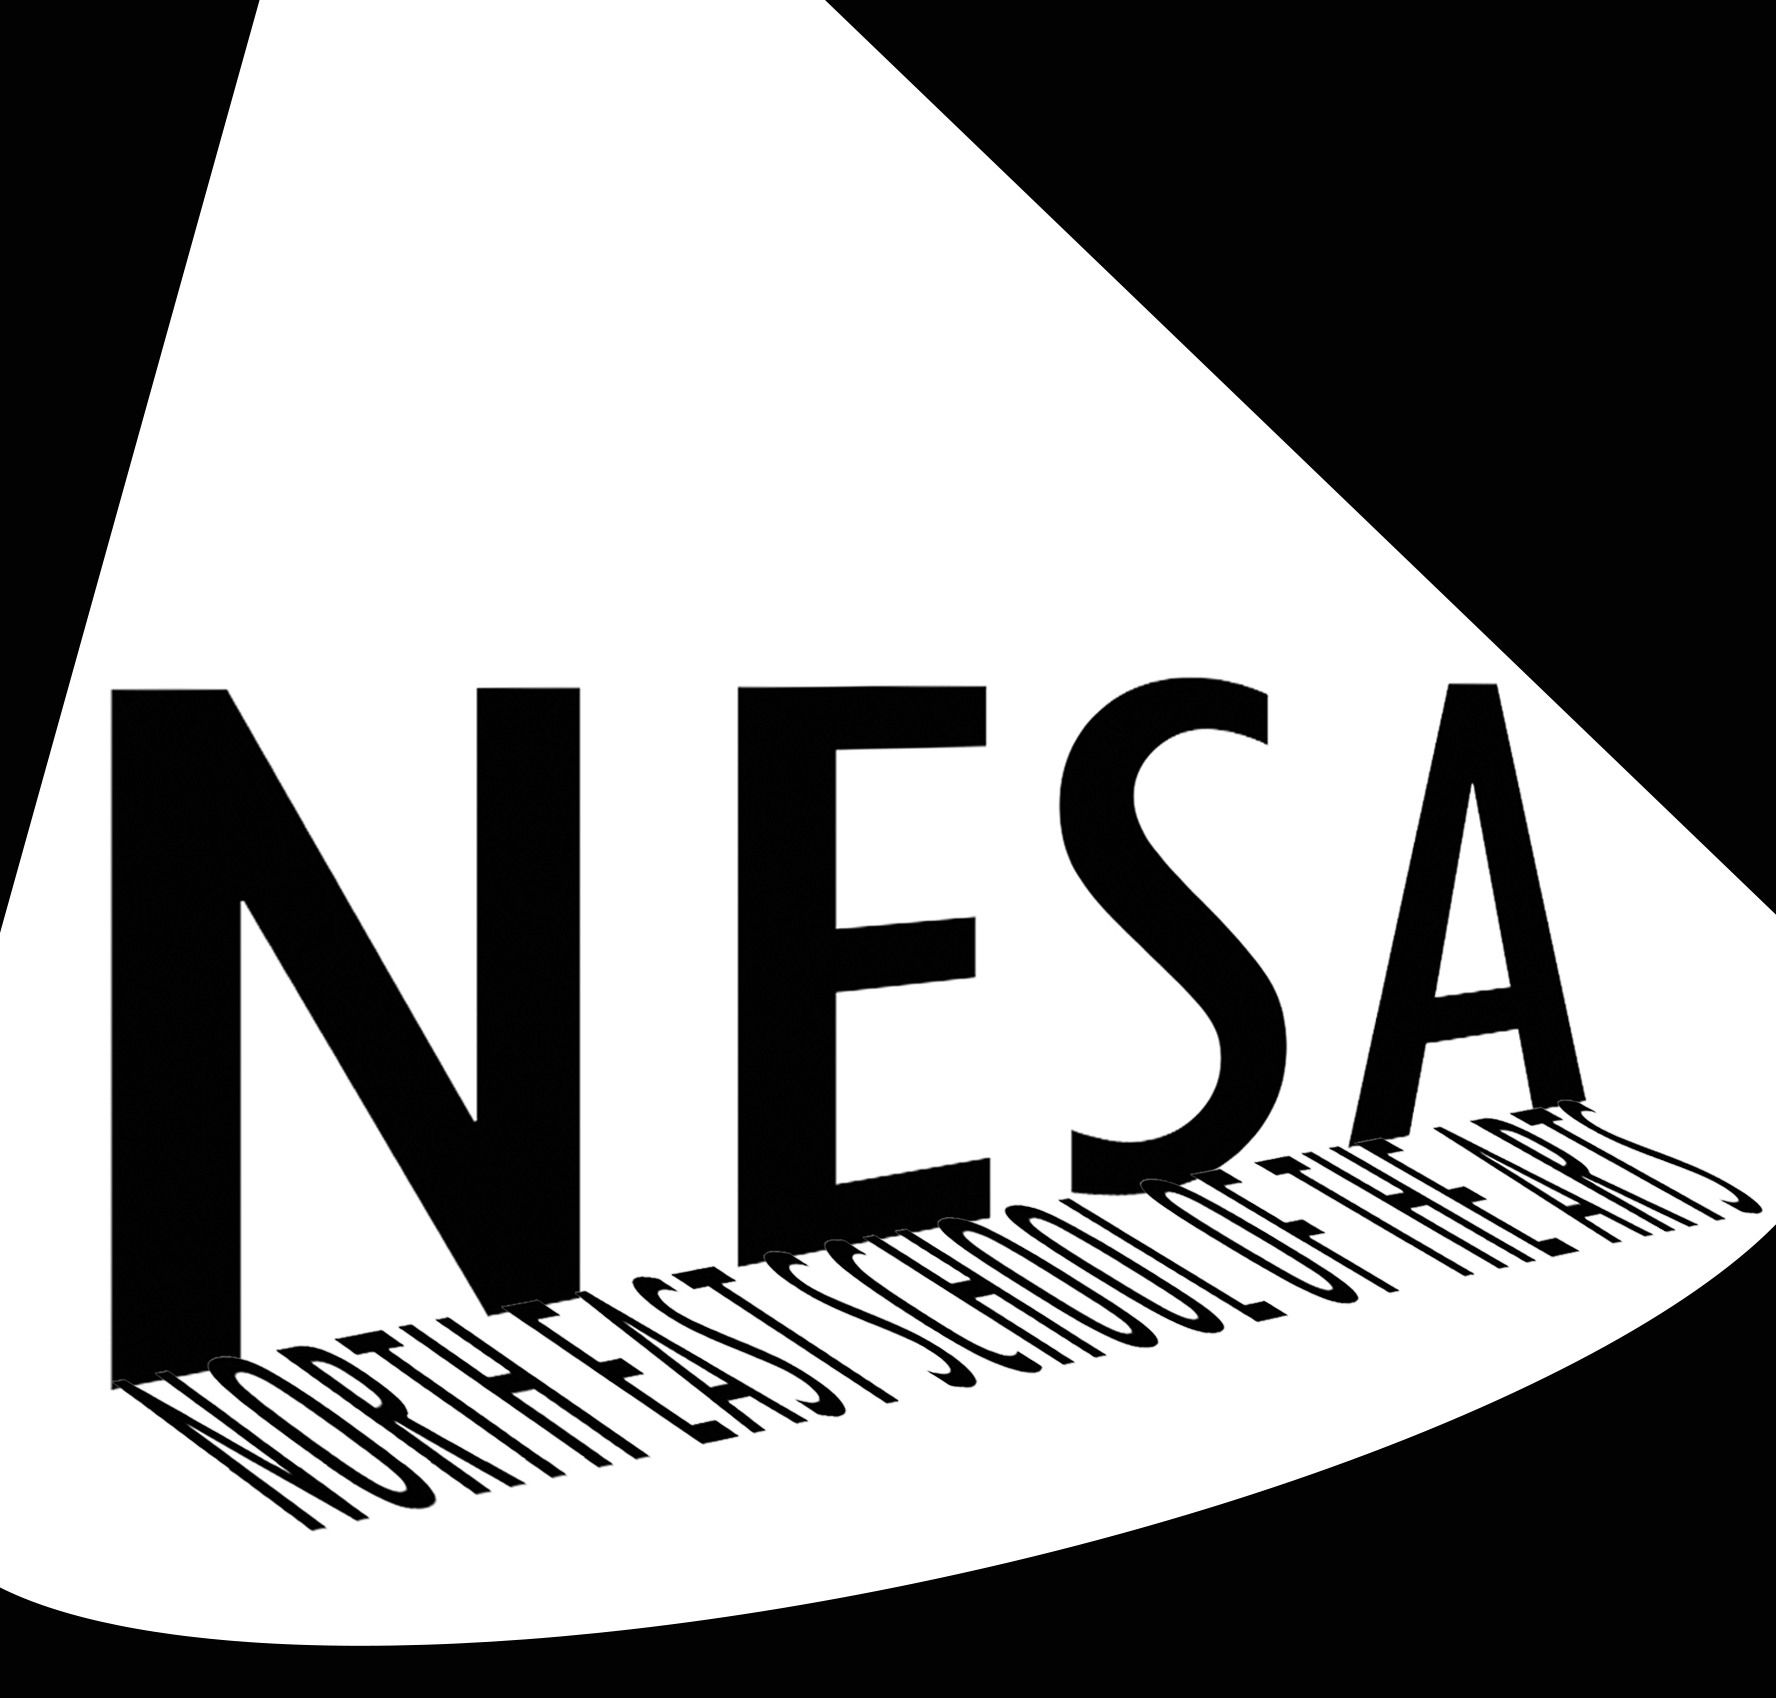 North East School of the Arts (NESA)